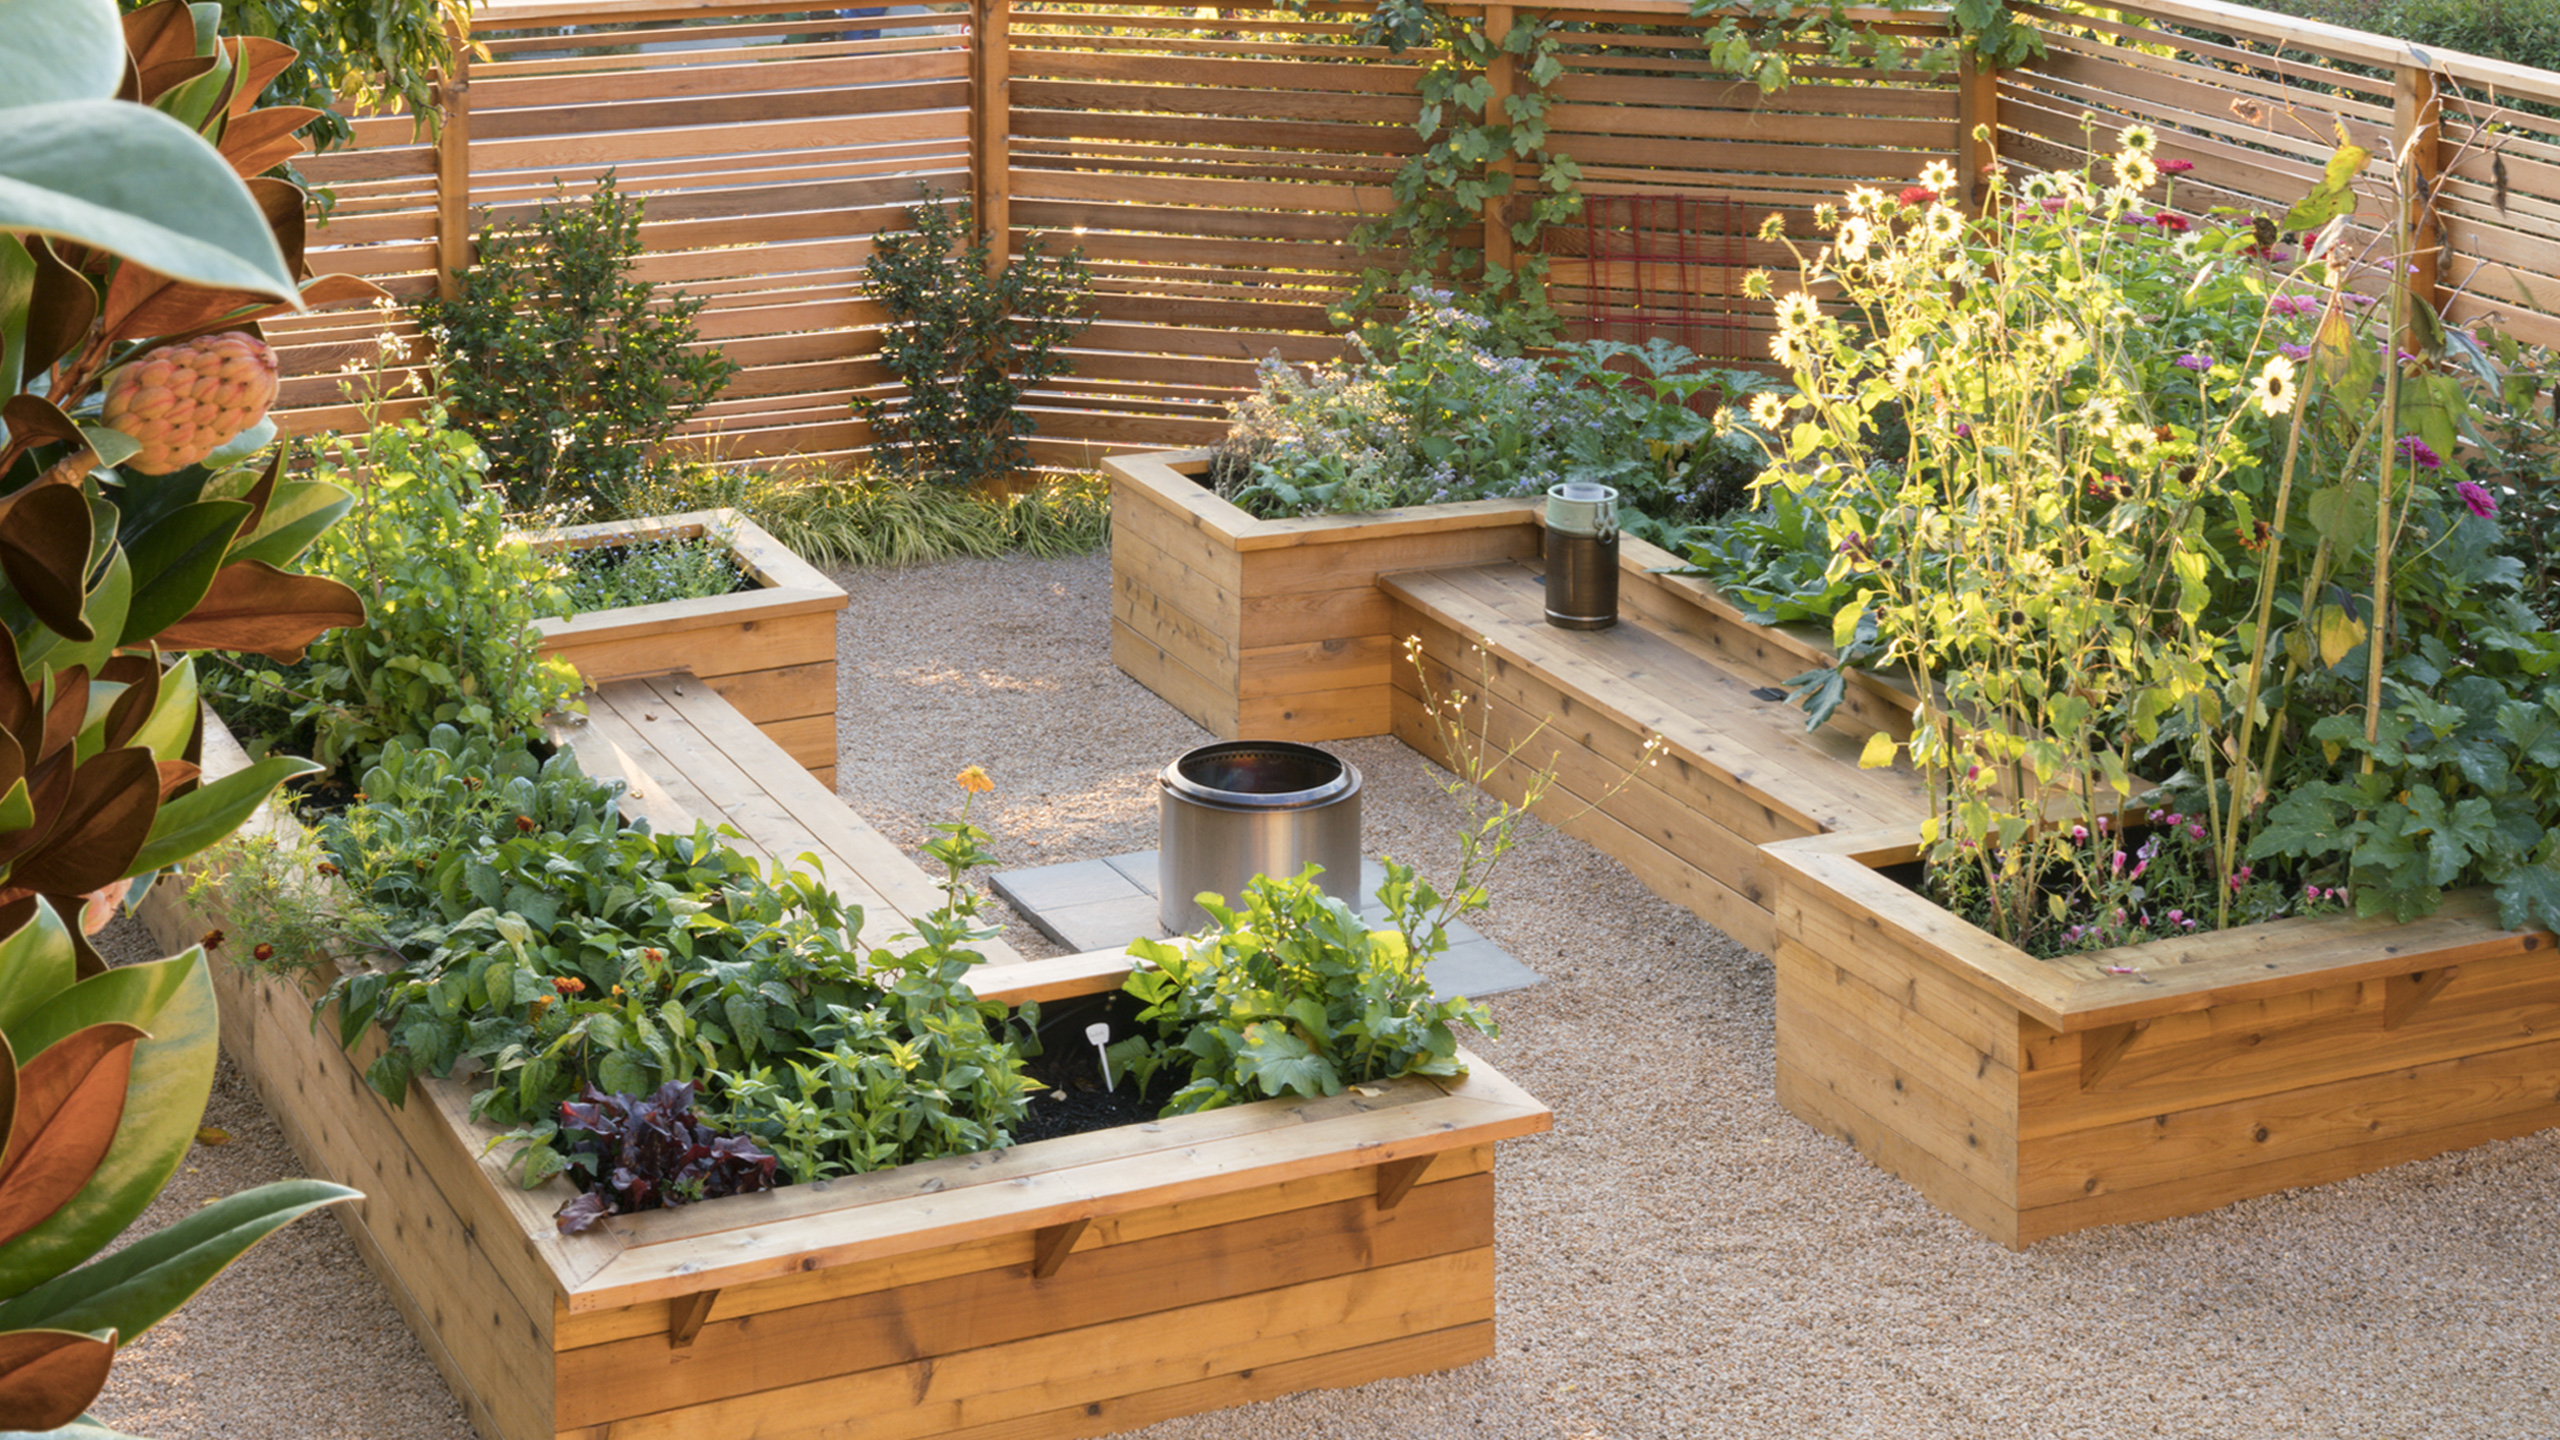 https://www.boardandvellum.com/wp-content/uploads/2019/01/16x9-central_district_edible_garden-backyard-raised_planter_benches.jpg